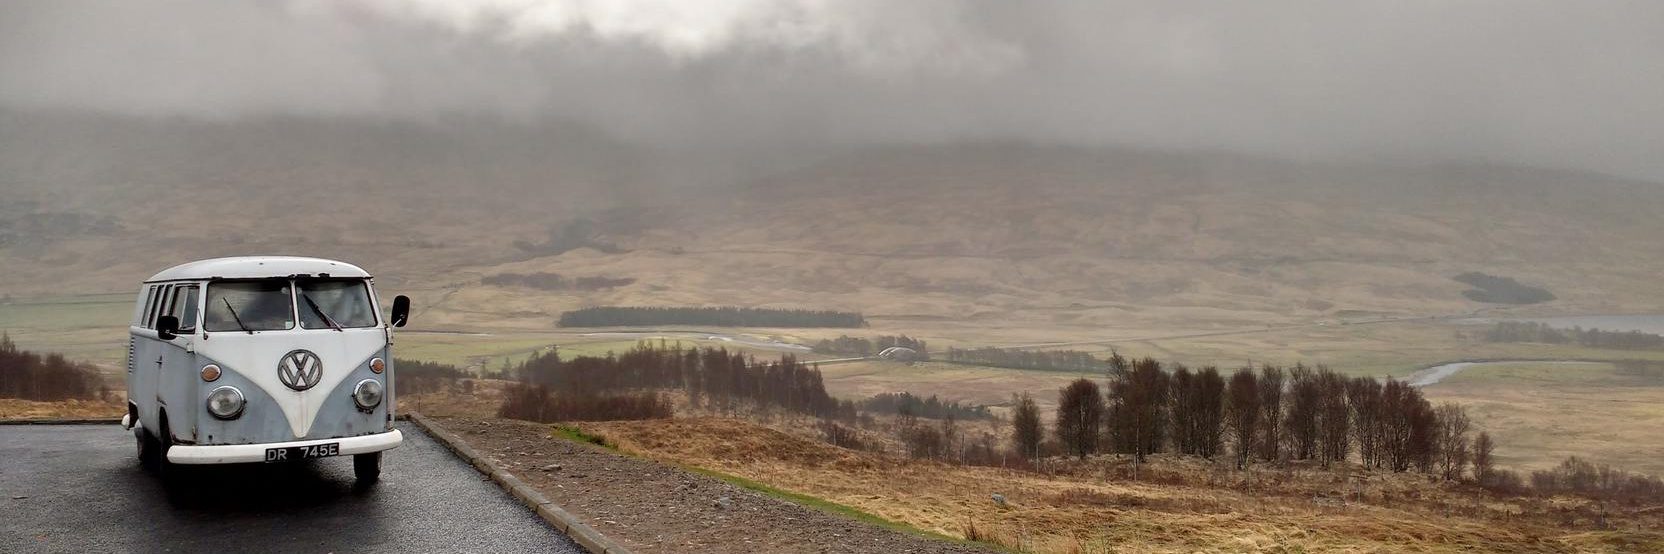 Loch Tulla Scotland Glasgow to Glencoe driving route Heritage